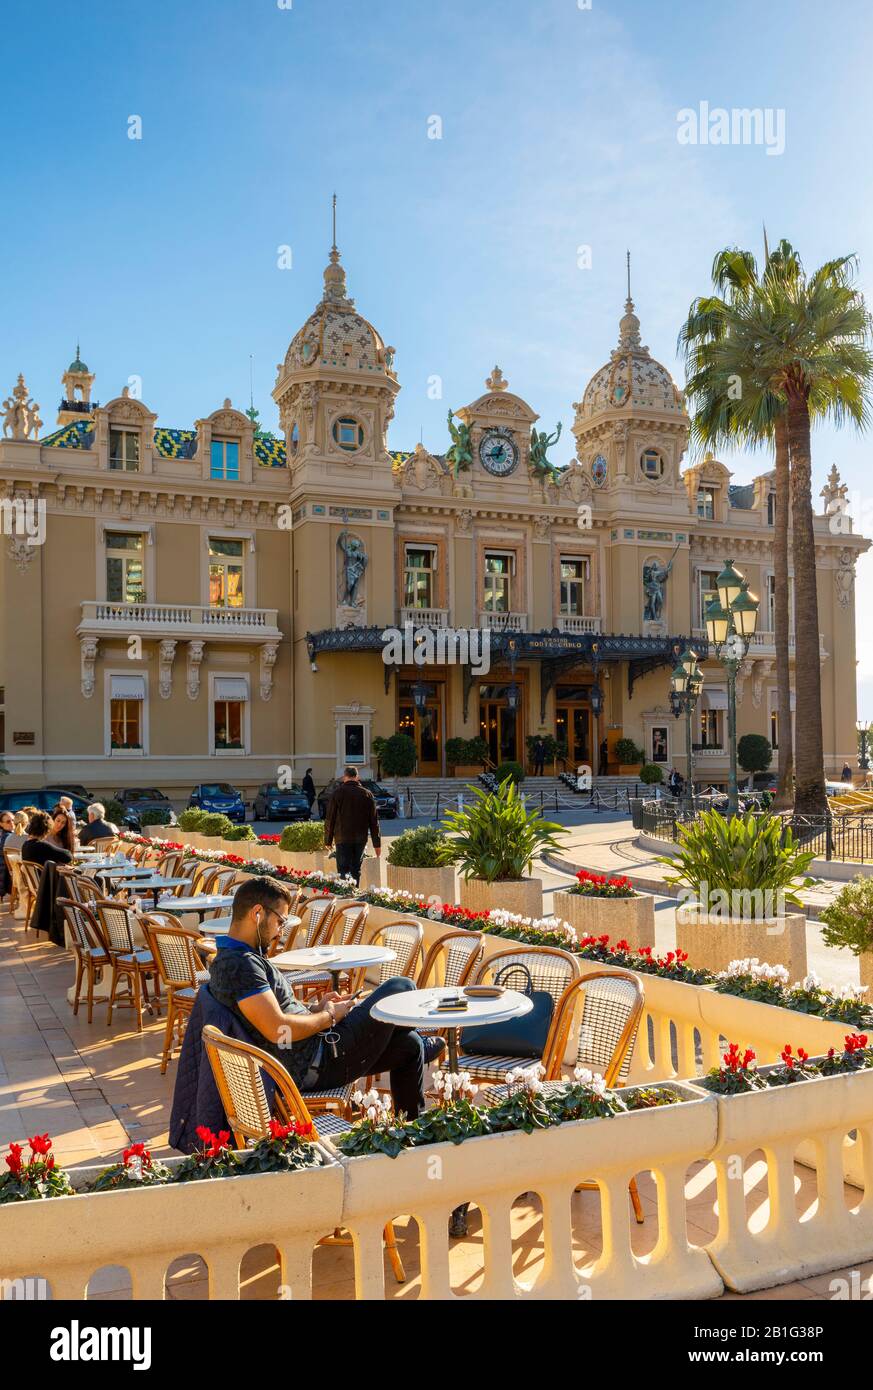 Monte Carlo Casino and Cafe de Paris, Monte Carlo, Monaco Stock Photo